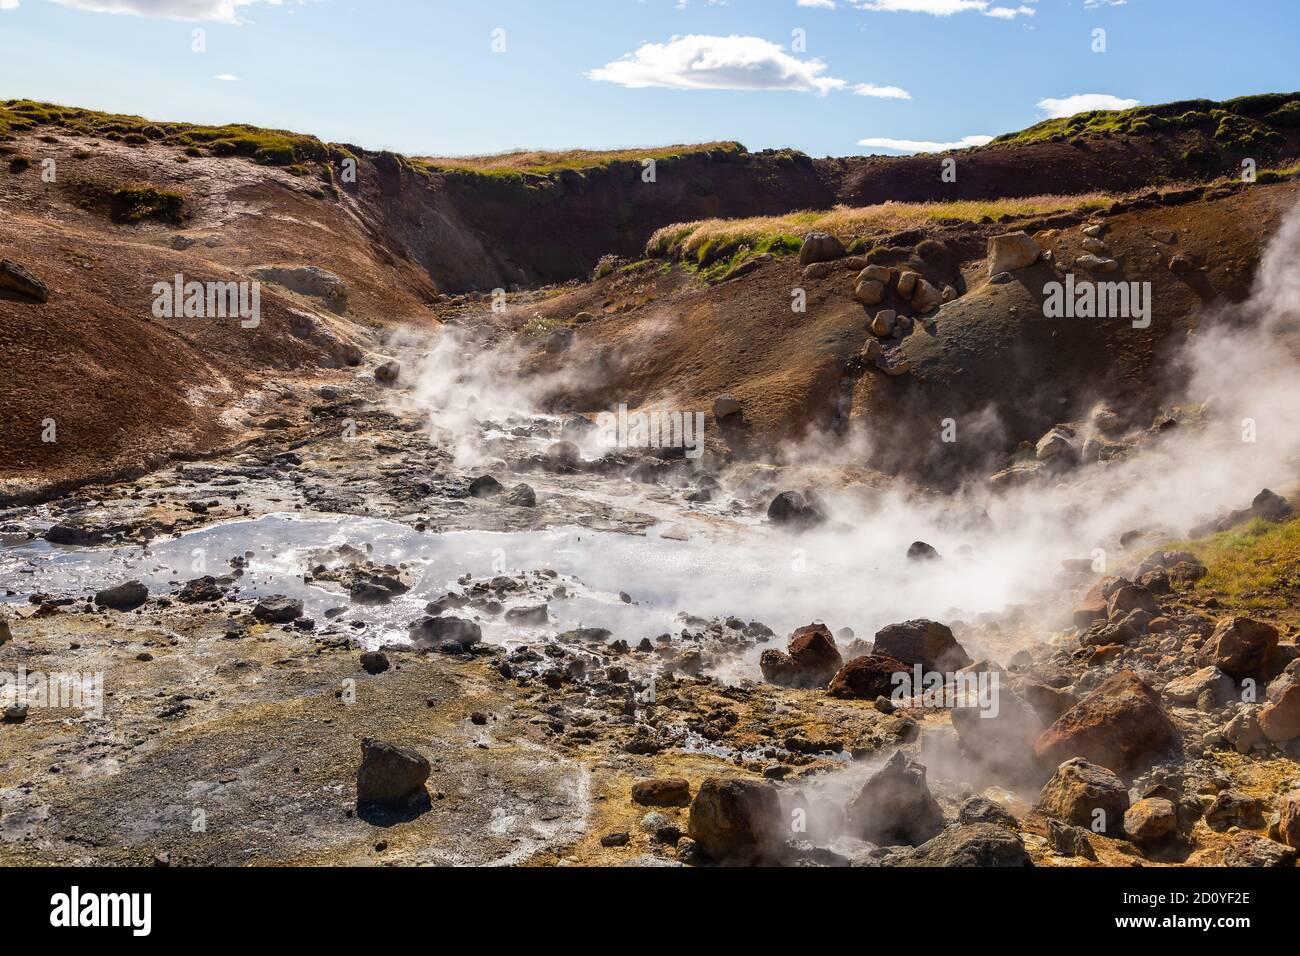 Geothermal area, hot steam, solfataras and hot mud cauldrons. Krisuvik, western Iceland. Reykjanesfolkvangur Peninsula. Stock Photo